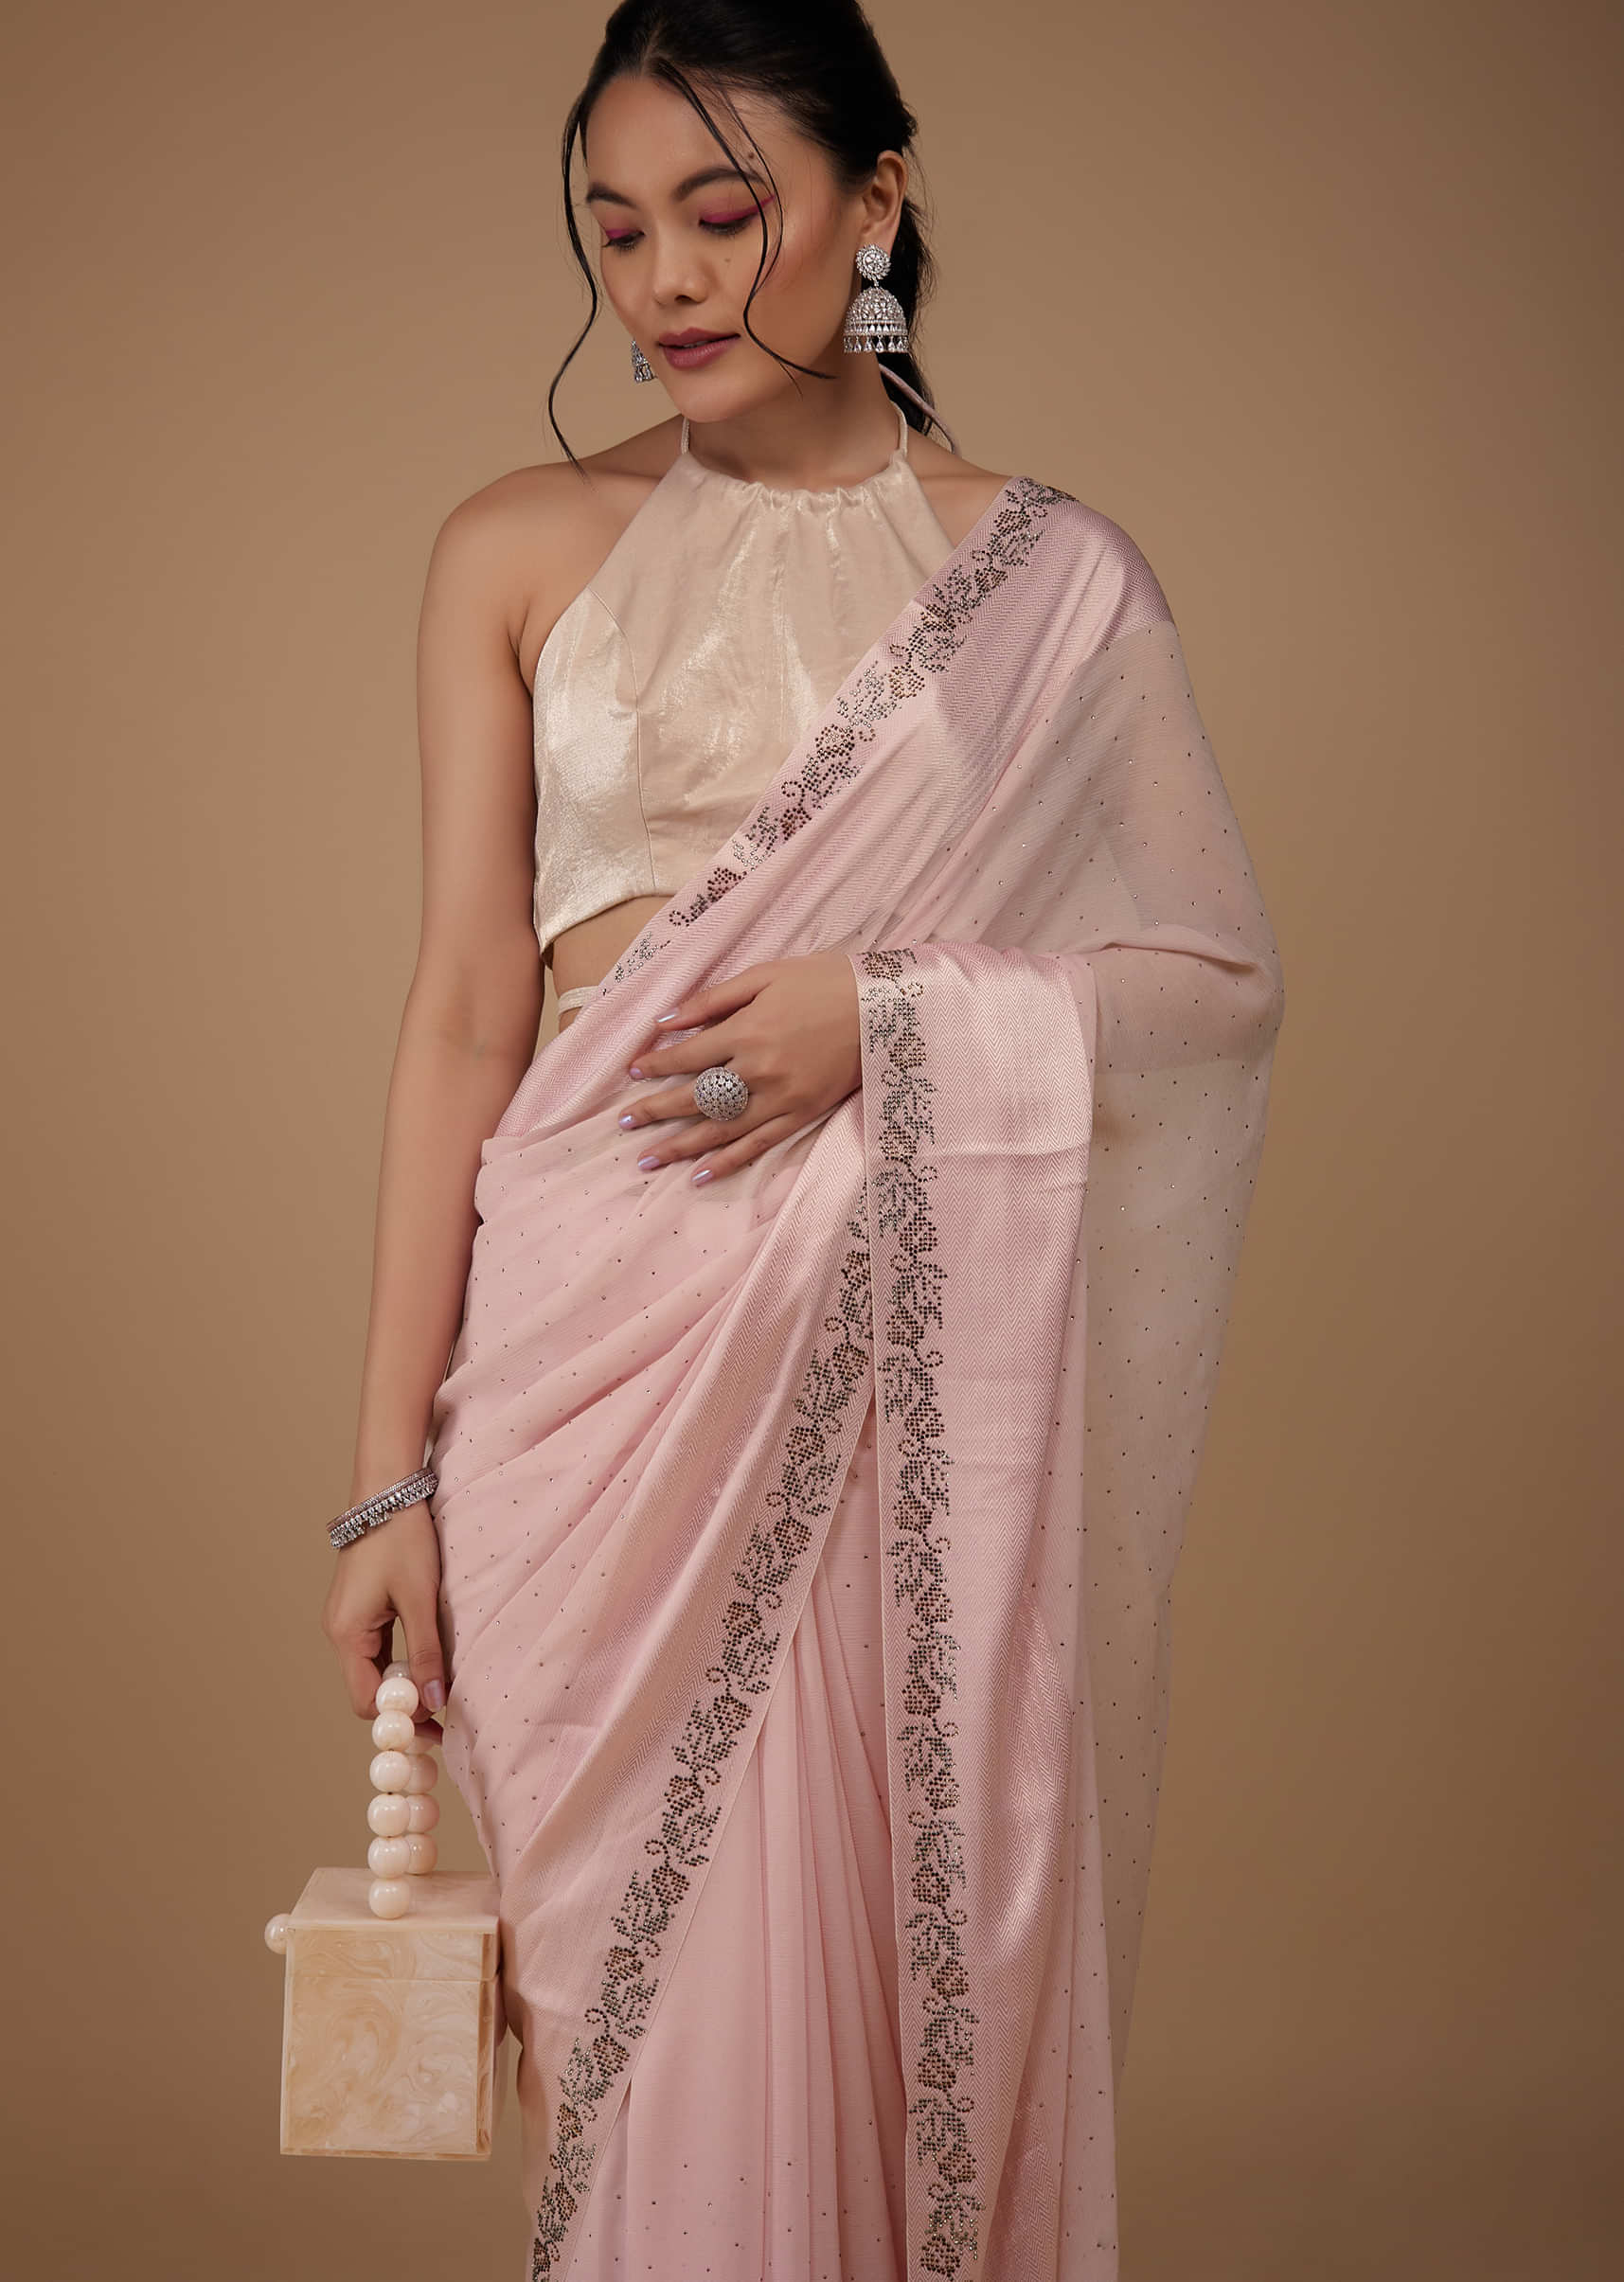 Baby Pink Chiffon Saree With Stone Embellishments And Satin Border